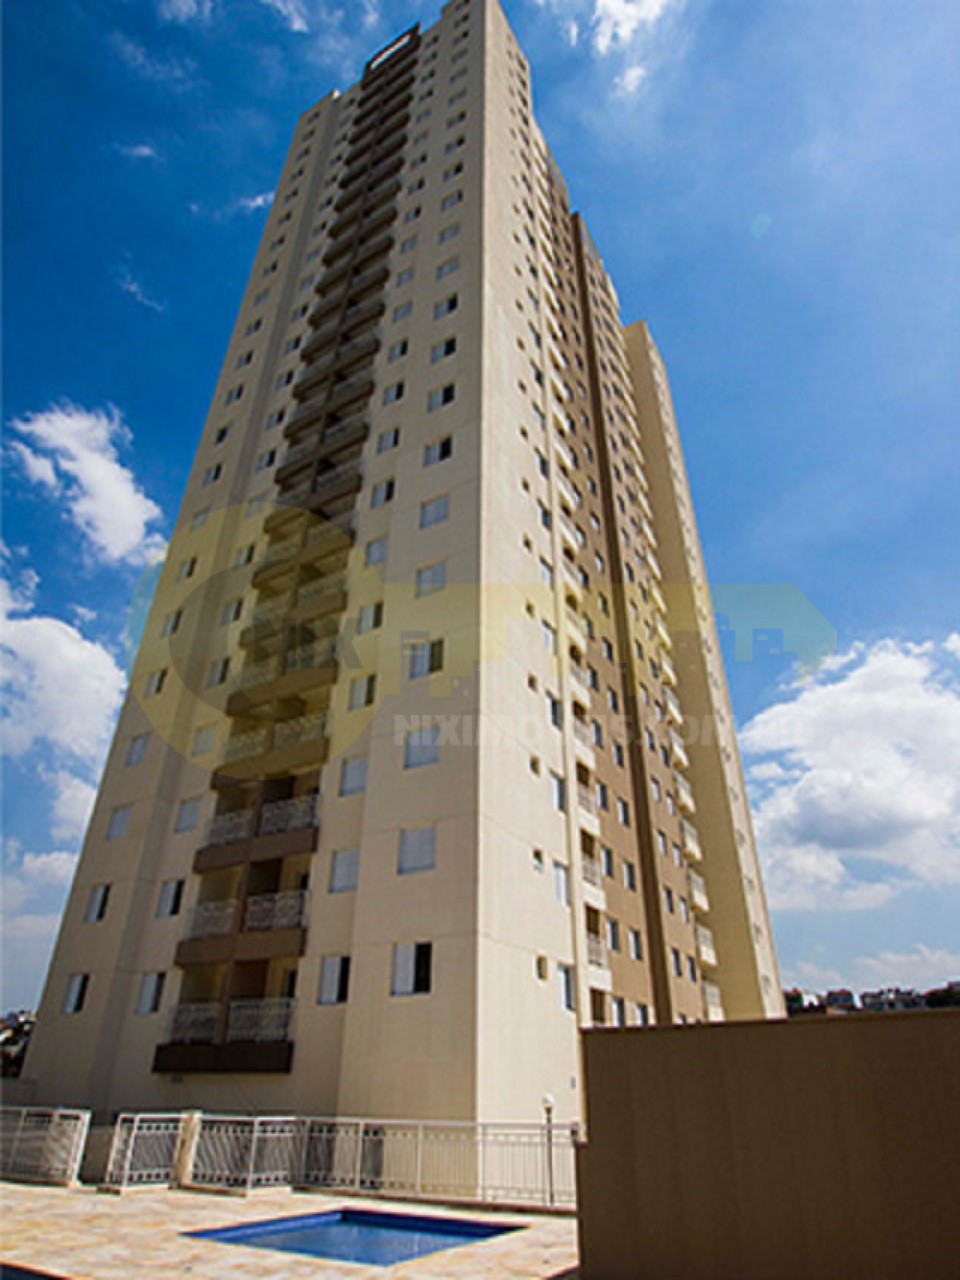 Comprar Apartamento Butanta USP SP Brasil Cida Universitaria Proximo Corifeu Metro 2 quartos, suíte, sala ampliada, varanda. Lazer completo, segurança 24h!